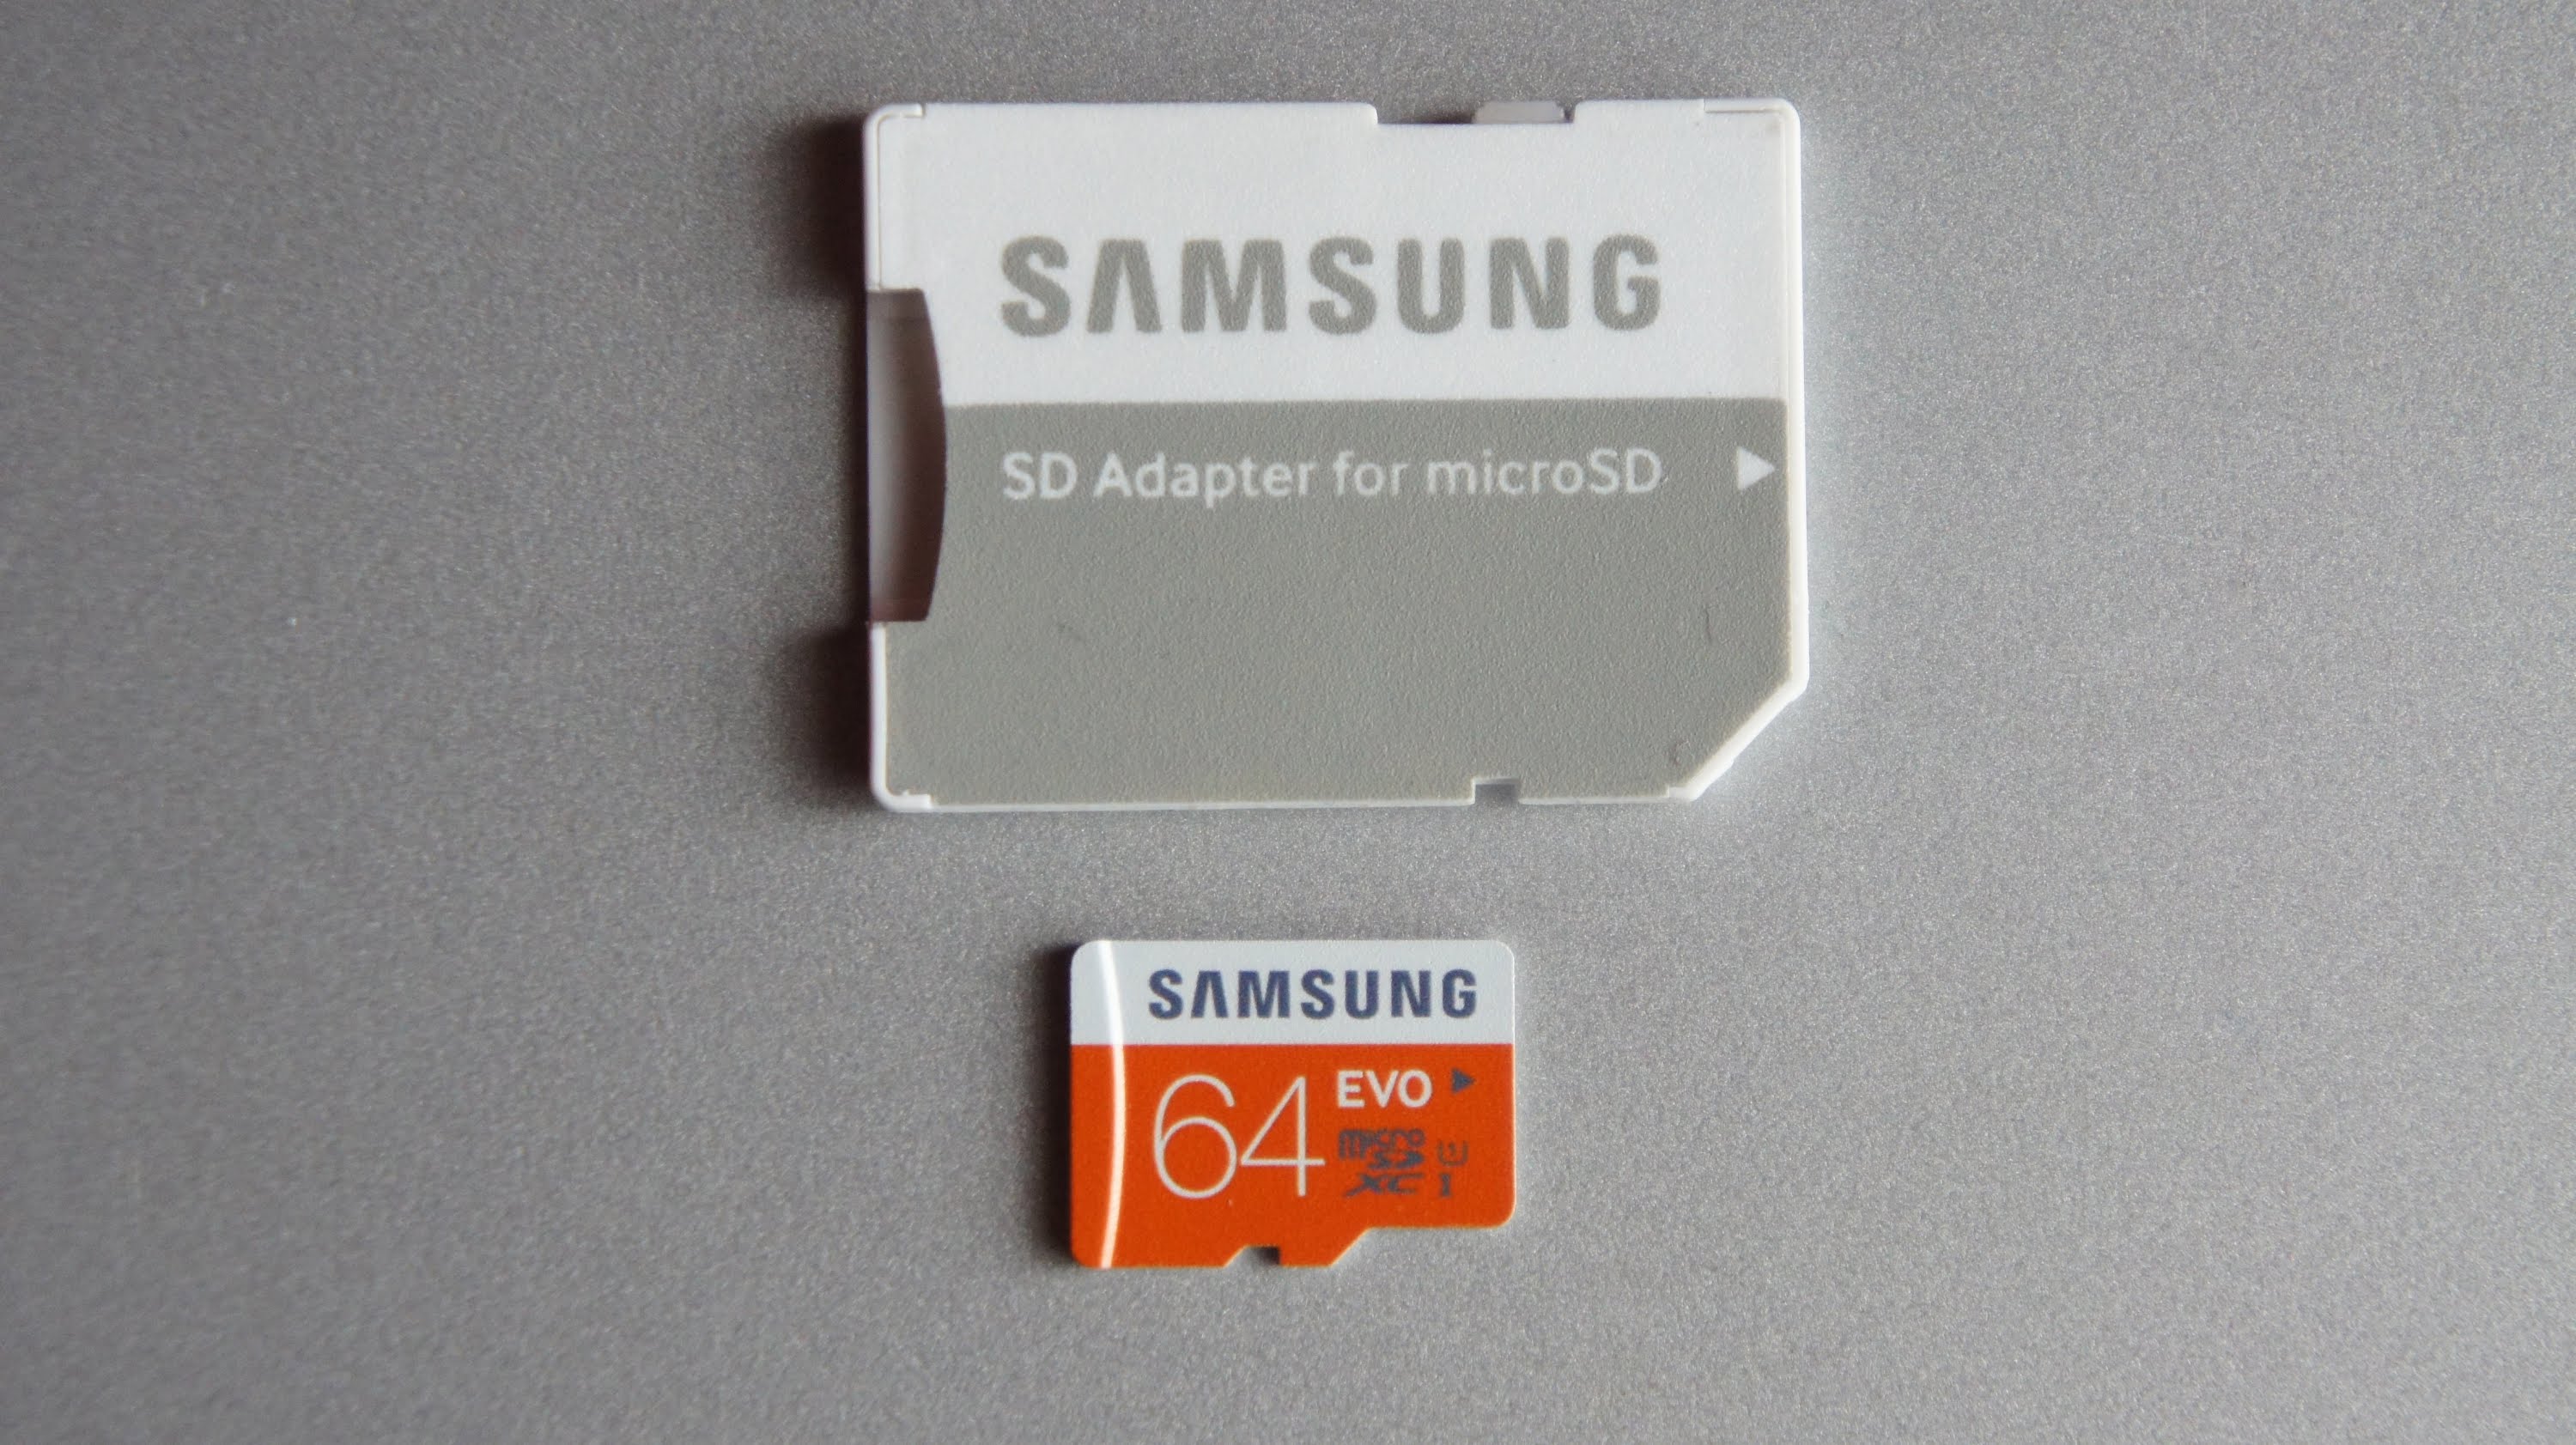 Samsung Microsd